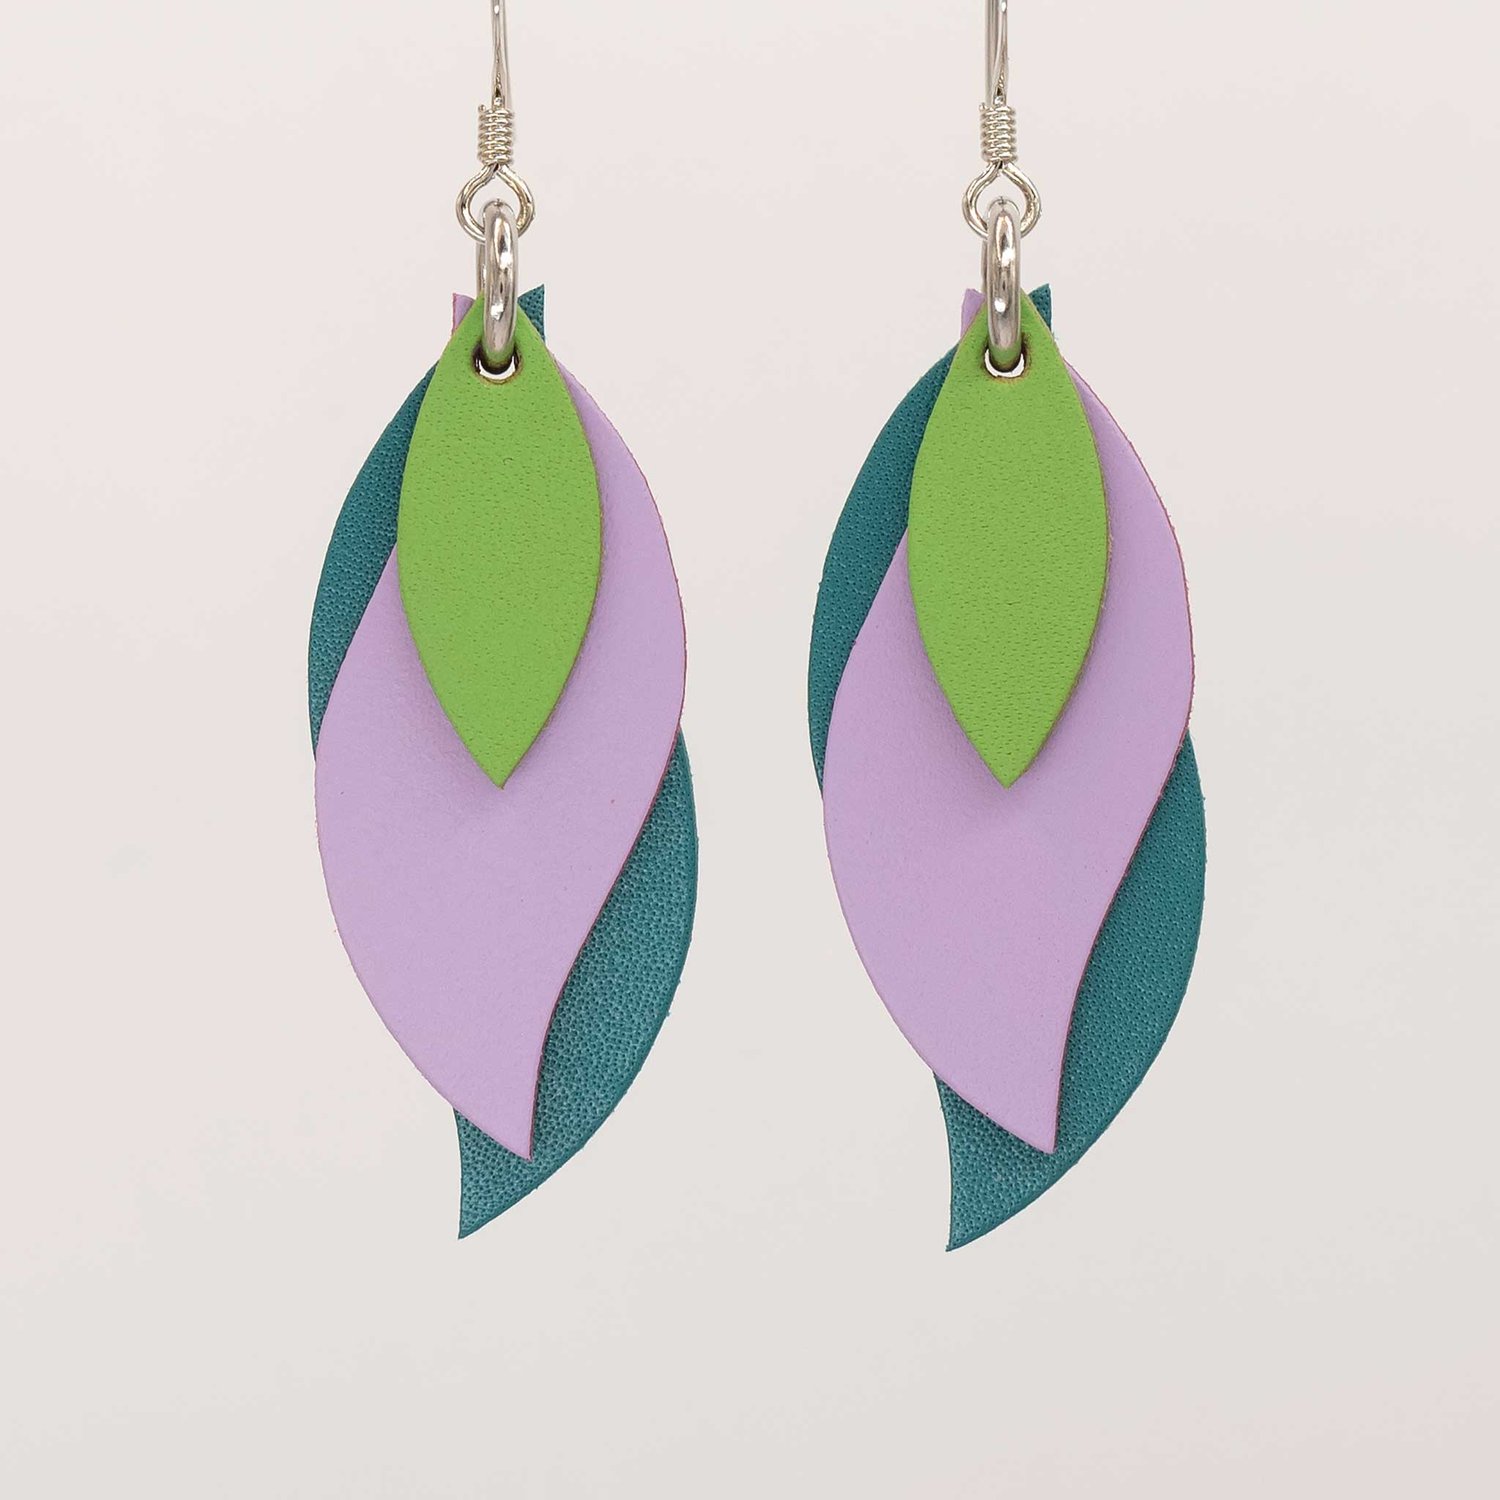 Image of Handmade Australian leather leaf earrings - Lime green, purple, teal green [LGP-629]